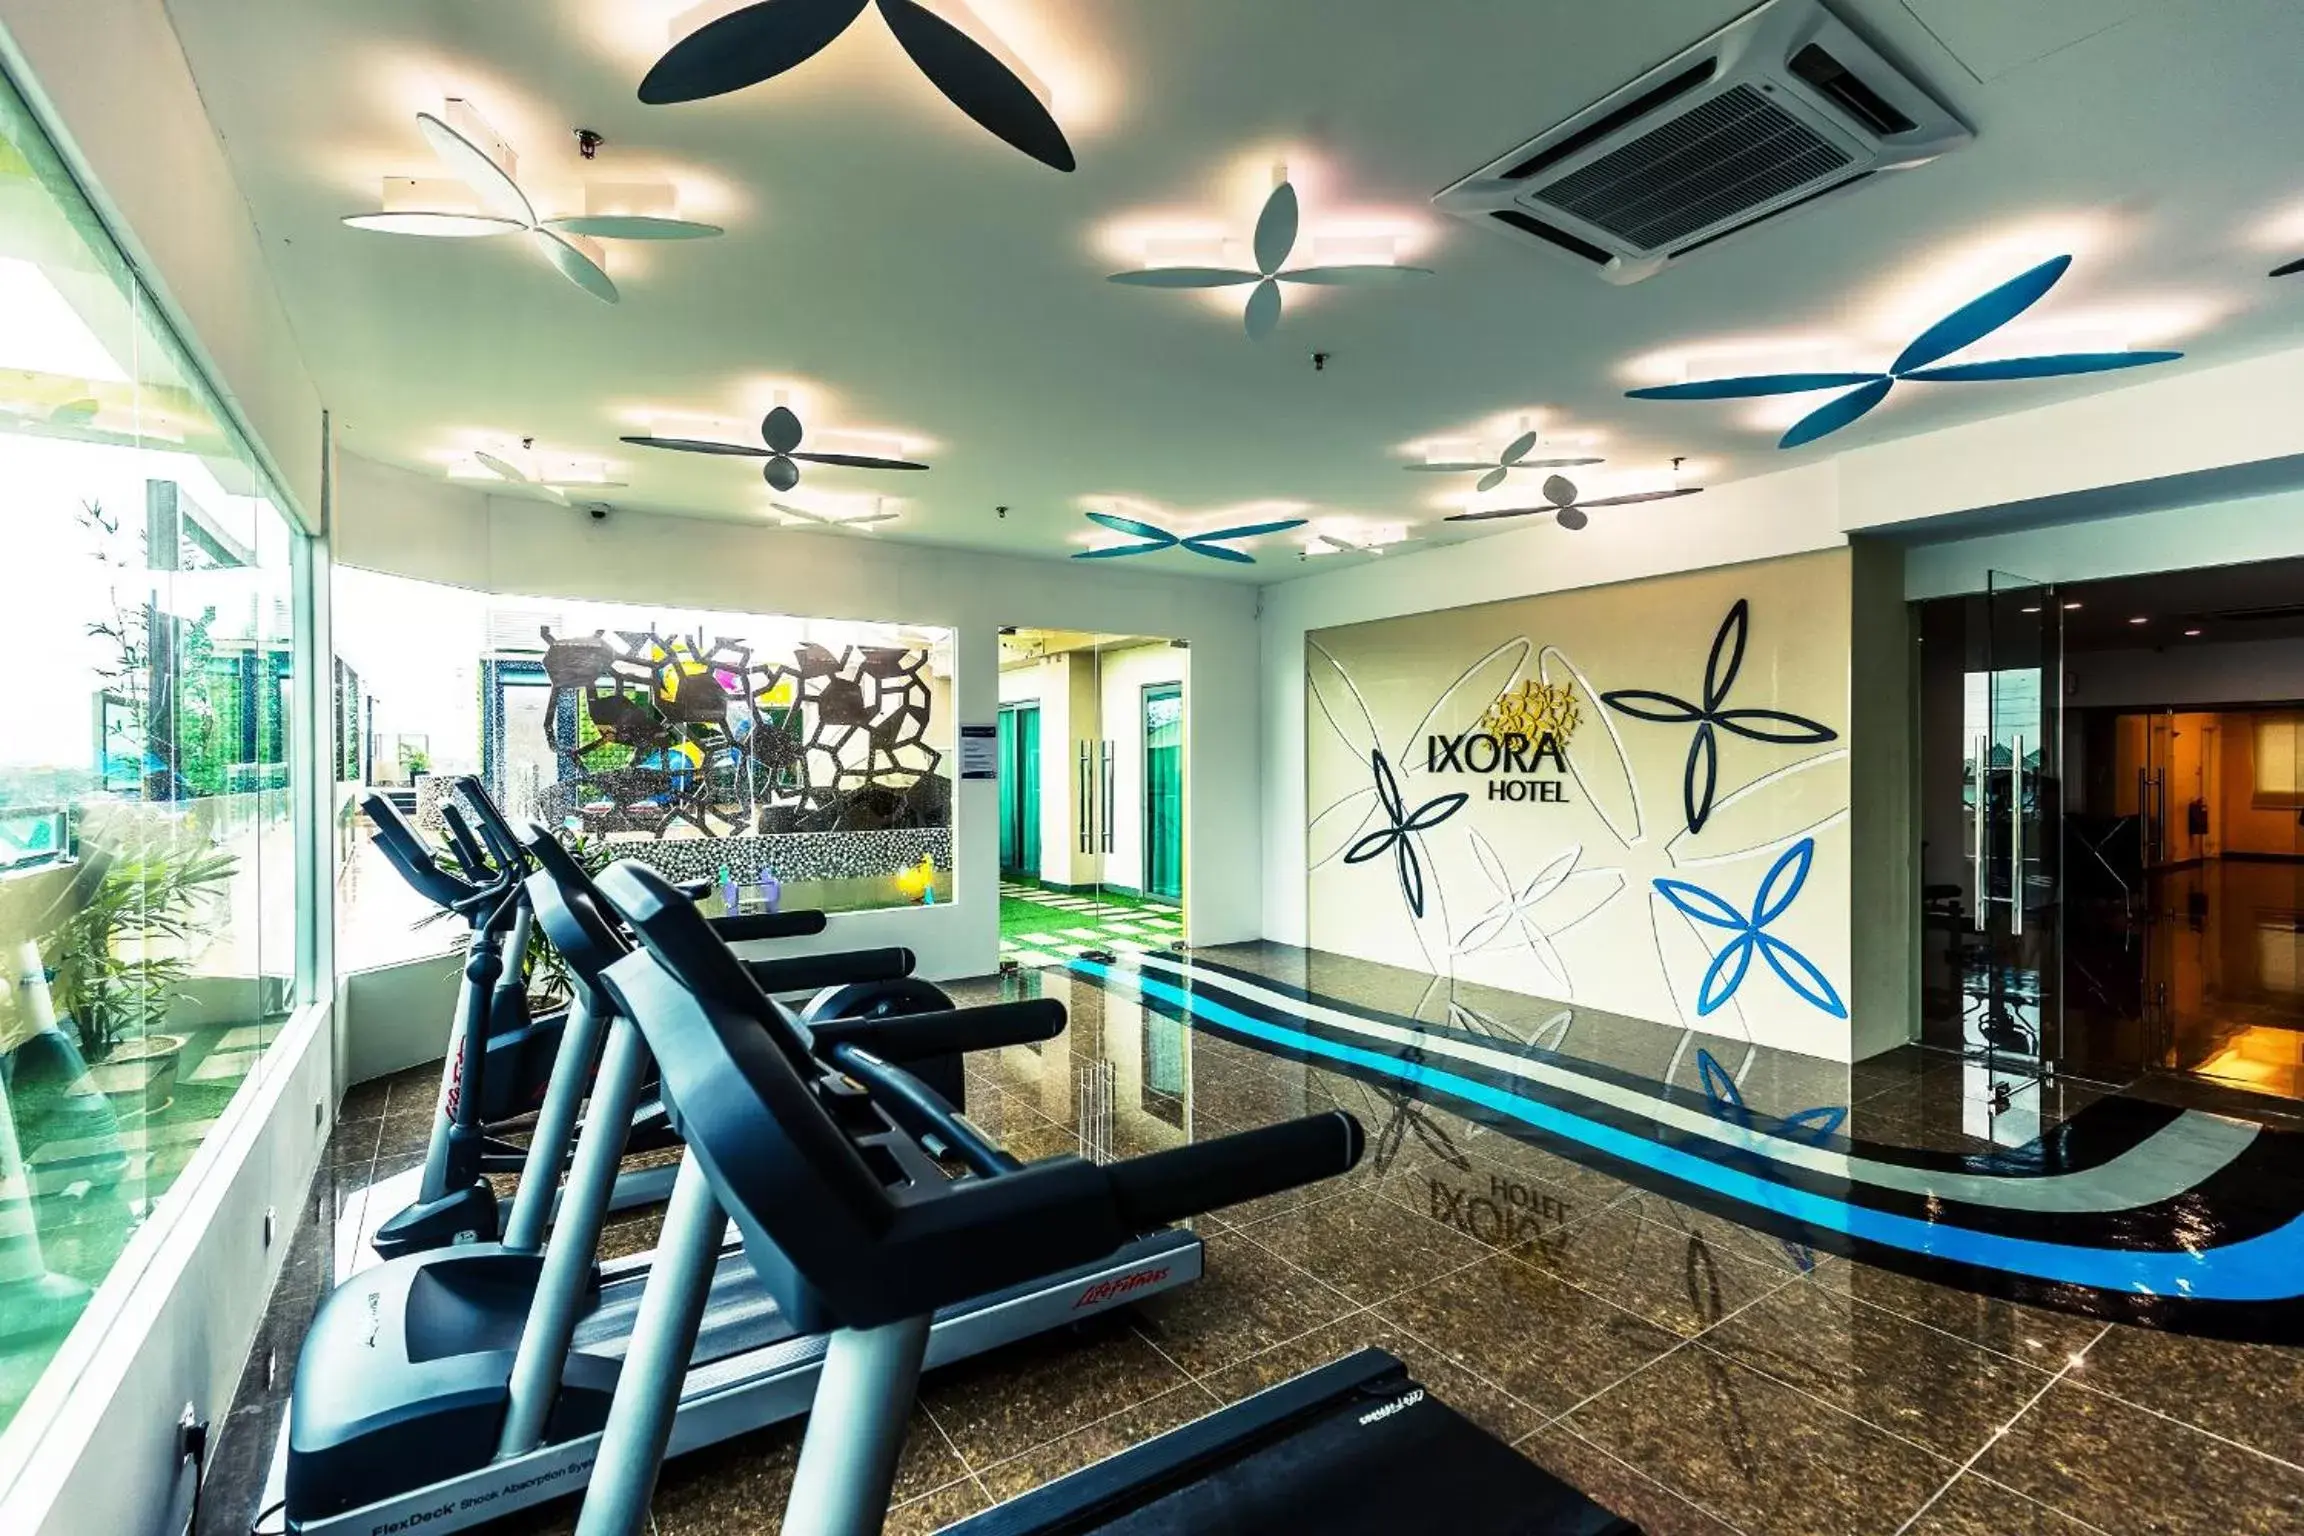 Fitness centre/facilities, Fitness Center/Facilities in Ixora Hotel Penang